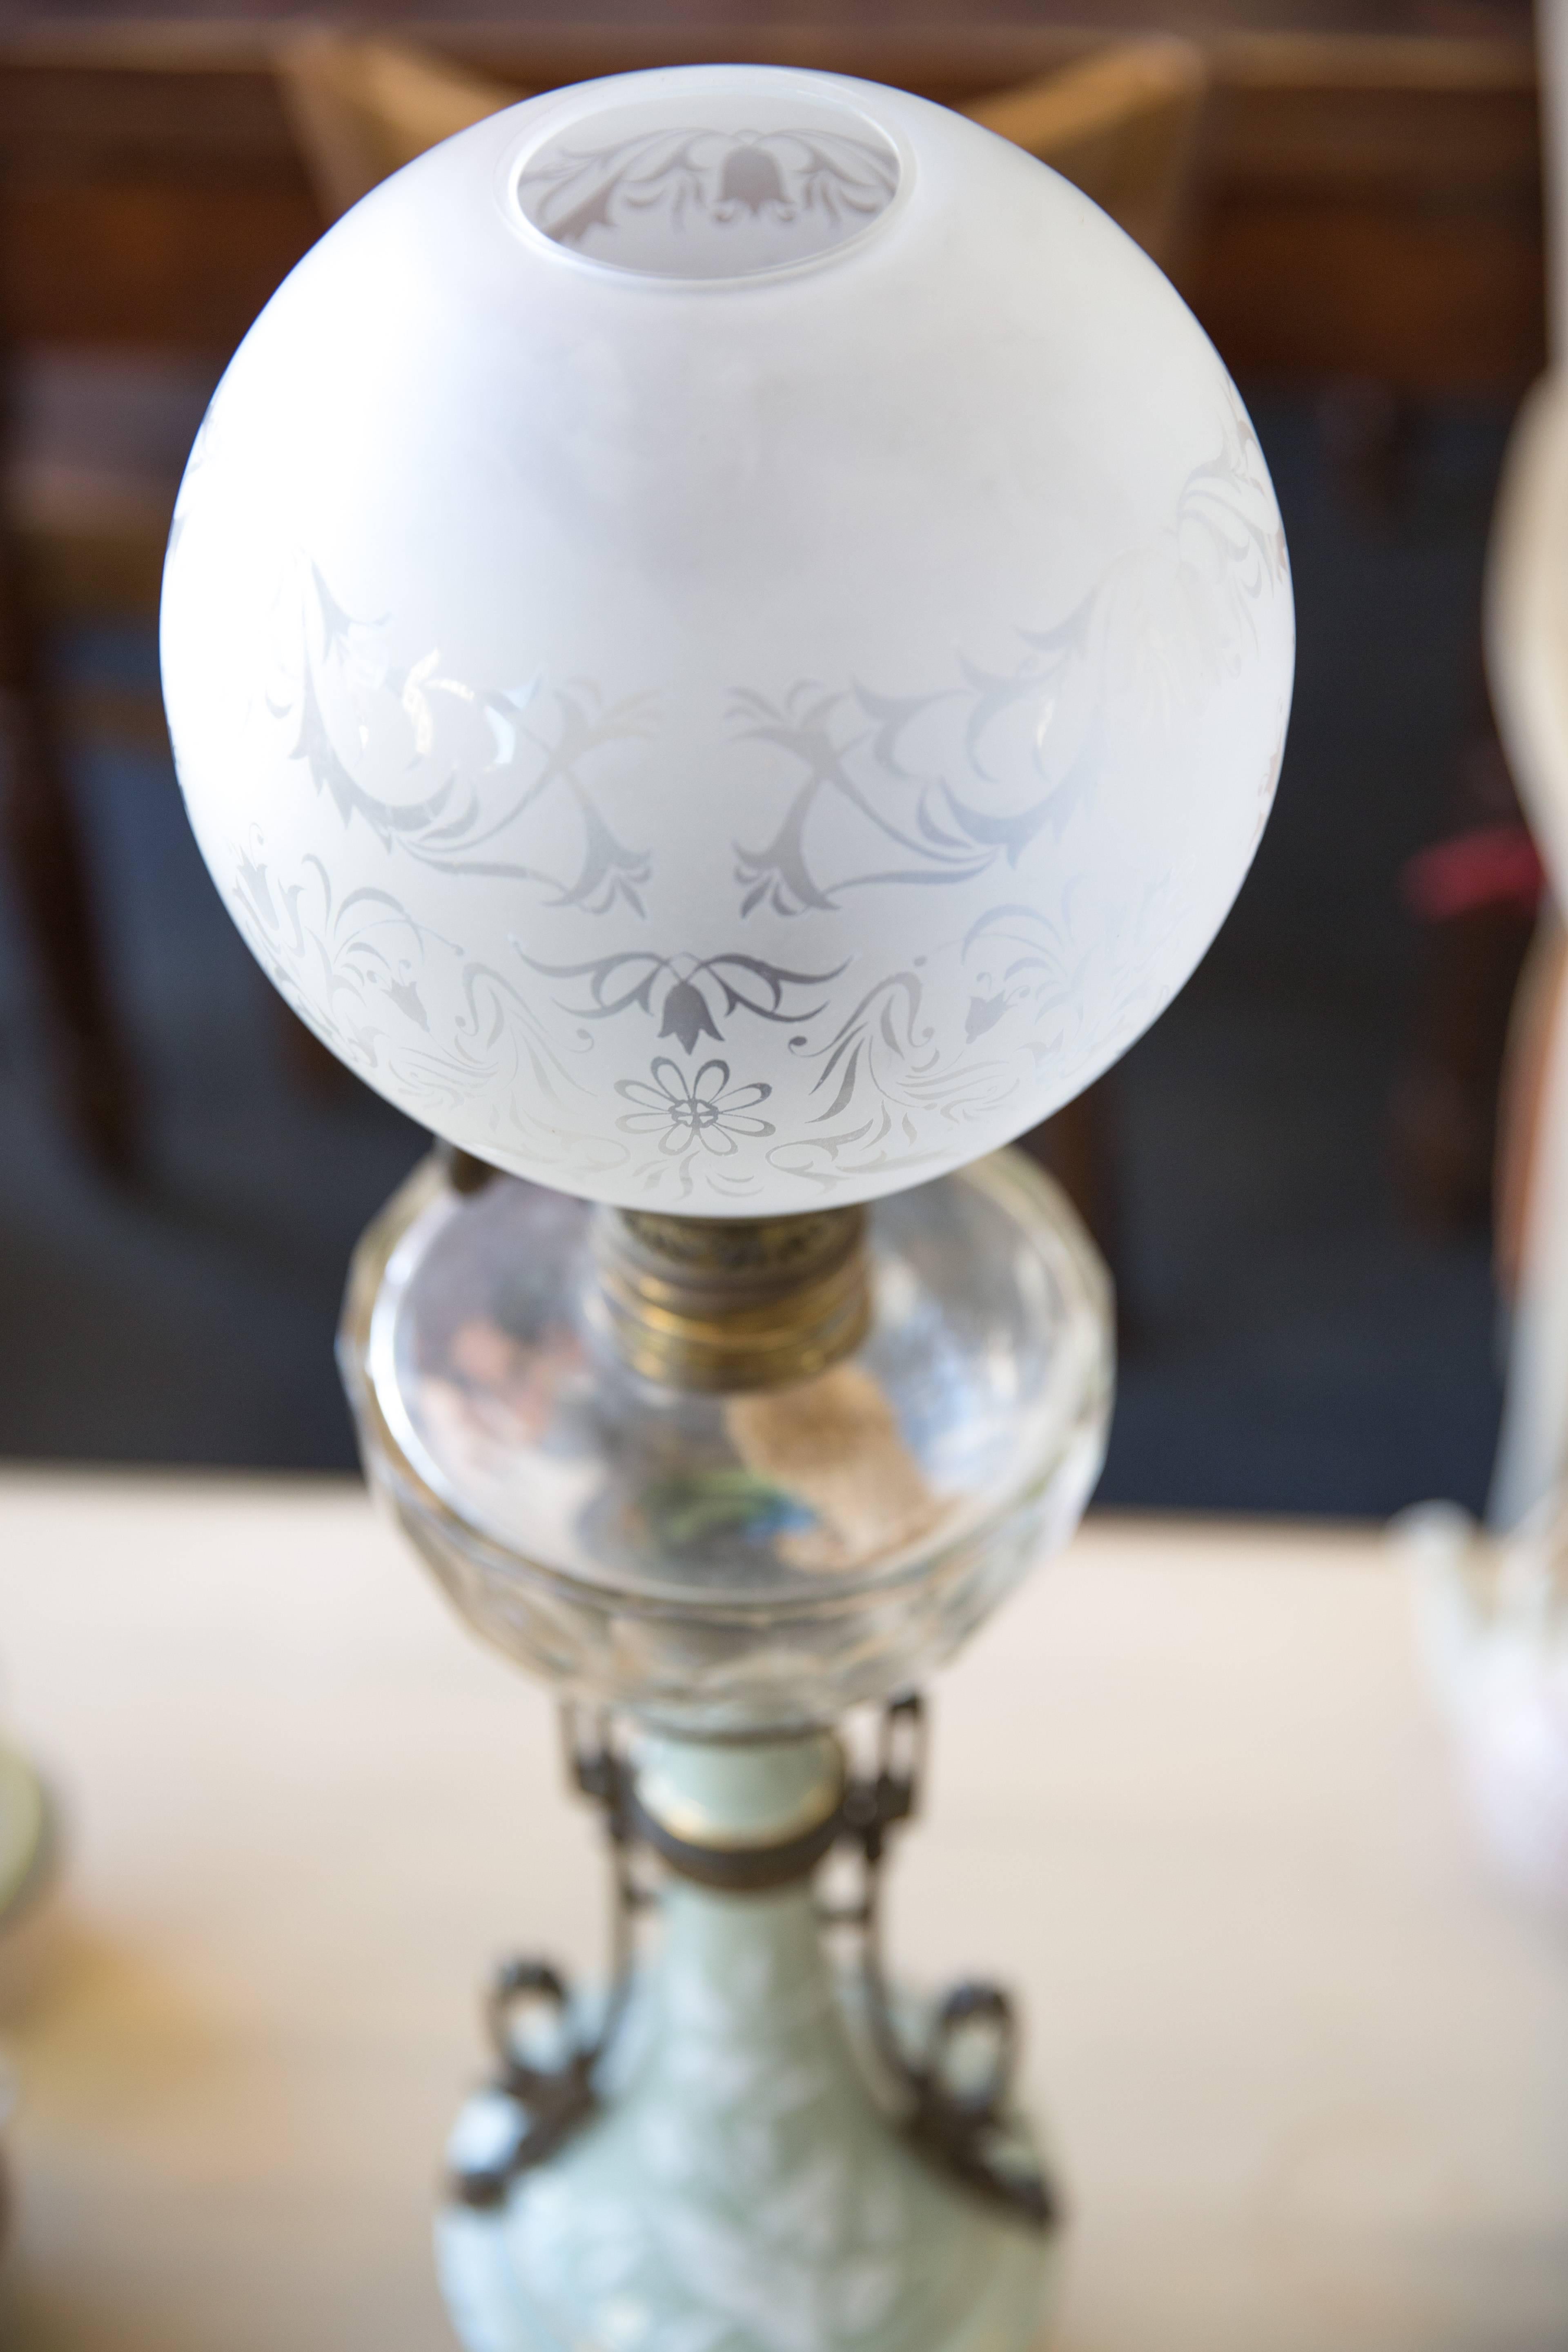 Exceptional Porcelain Lamp with Original Oil Burner, circa 1900 For Sale 1